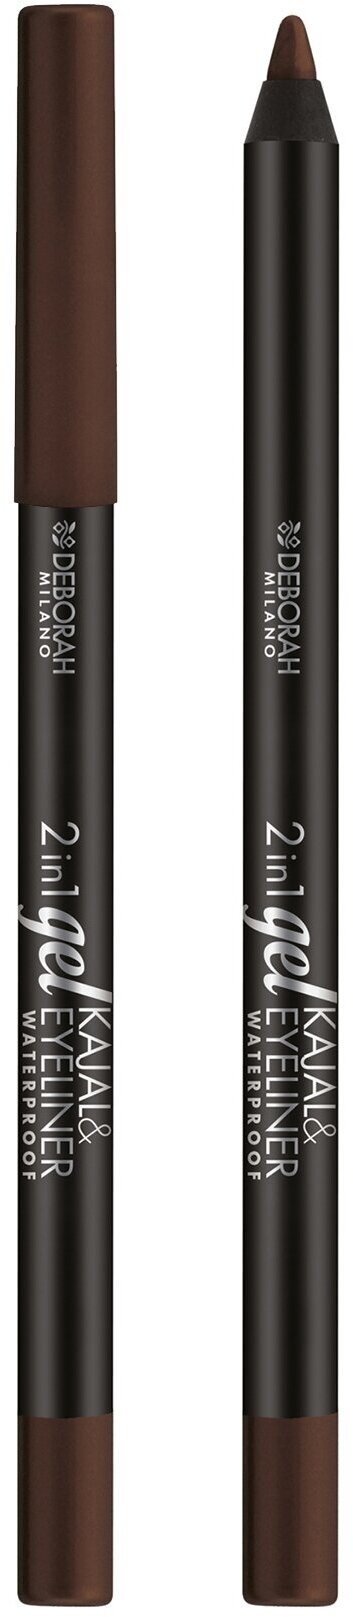 DEBORAH MILANO Карандаш для век гелевый 2 in 1 Gel Kajal & Eyeliner Pencil, 1,4 г, 05 Коричневый